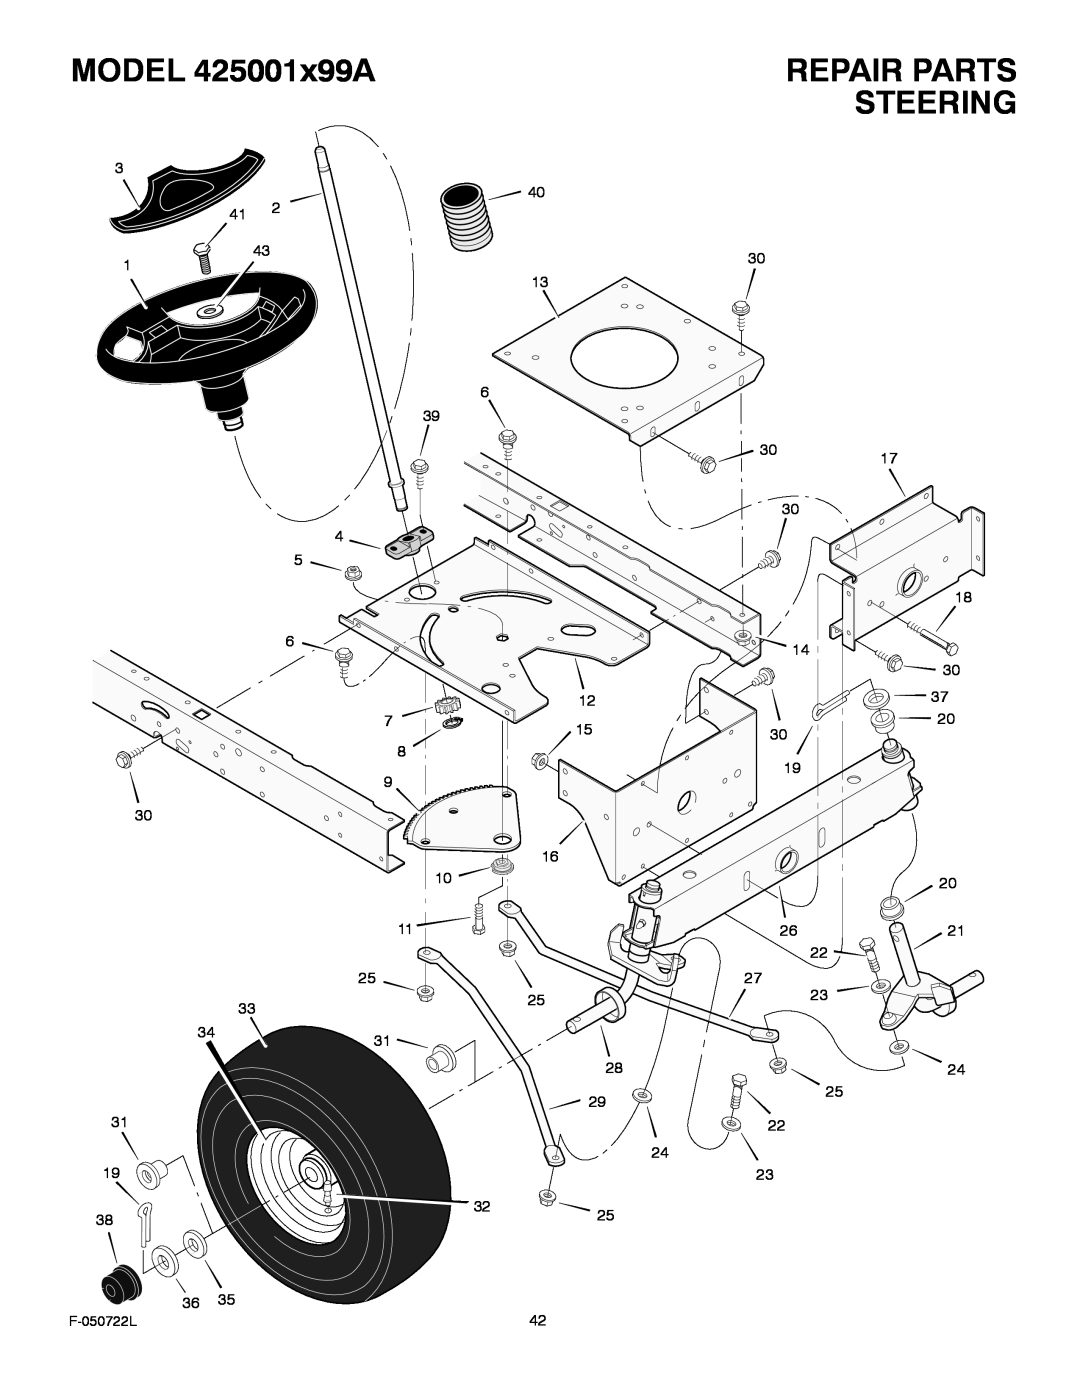 Murray manual Steering, MODEL 425001x99A, Repair Parts 